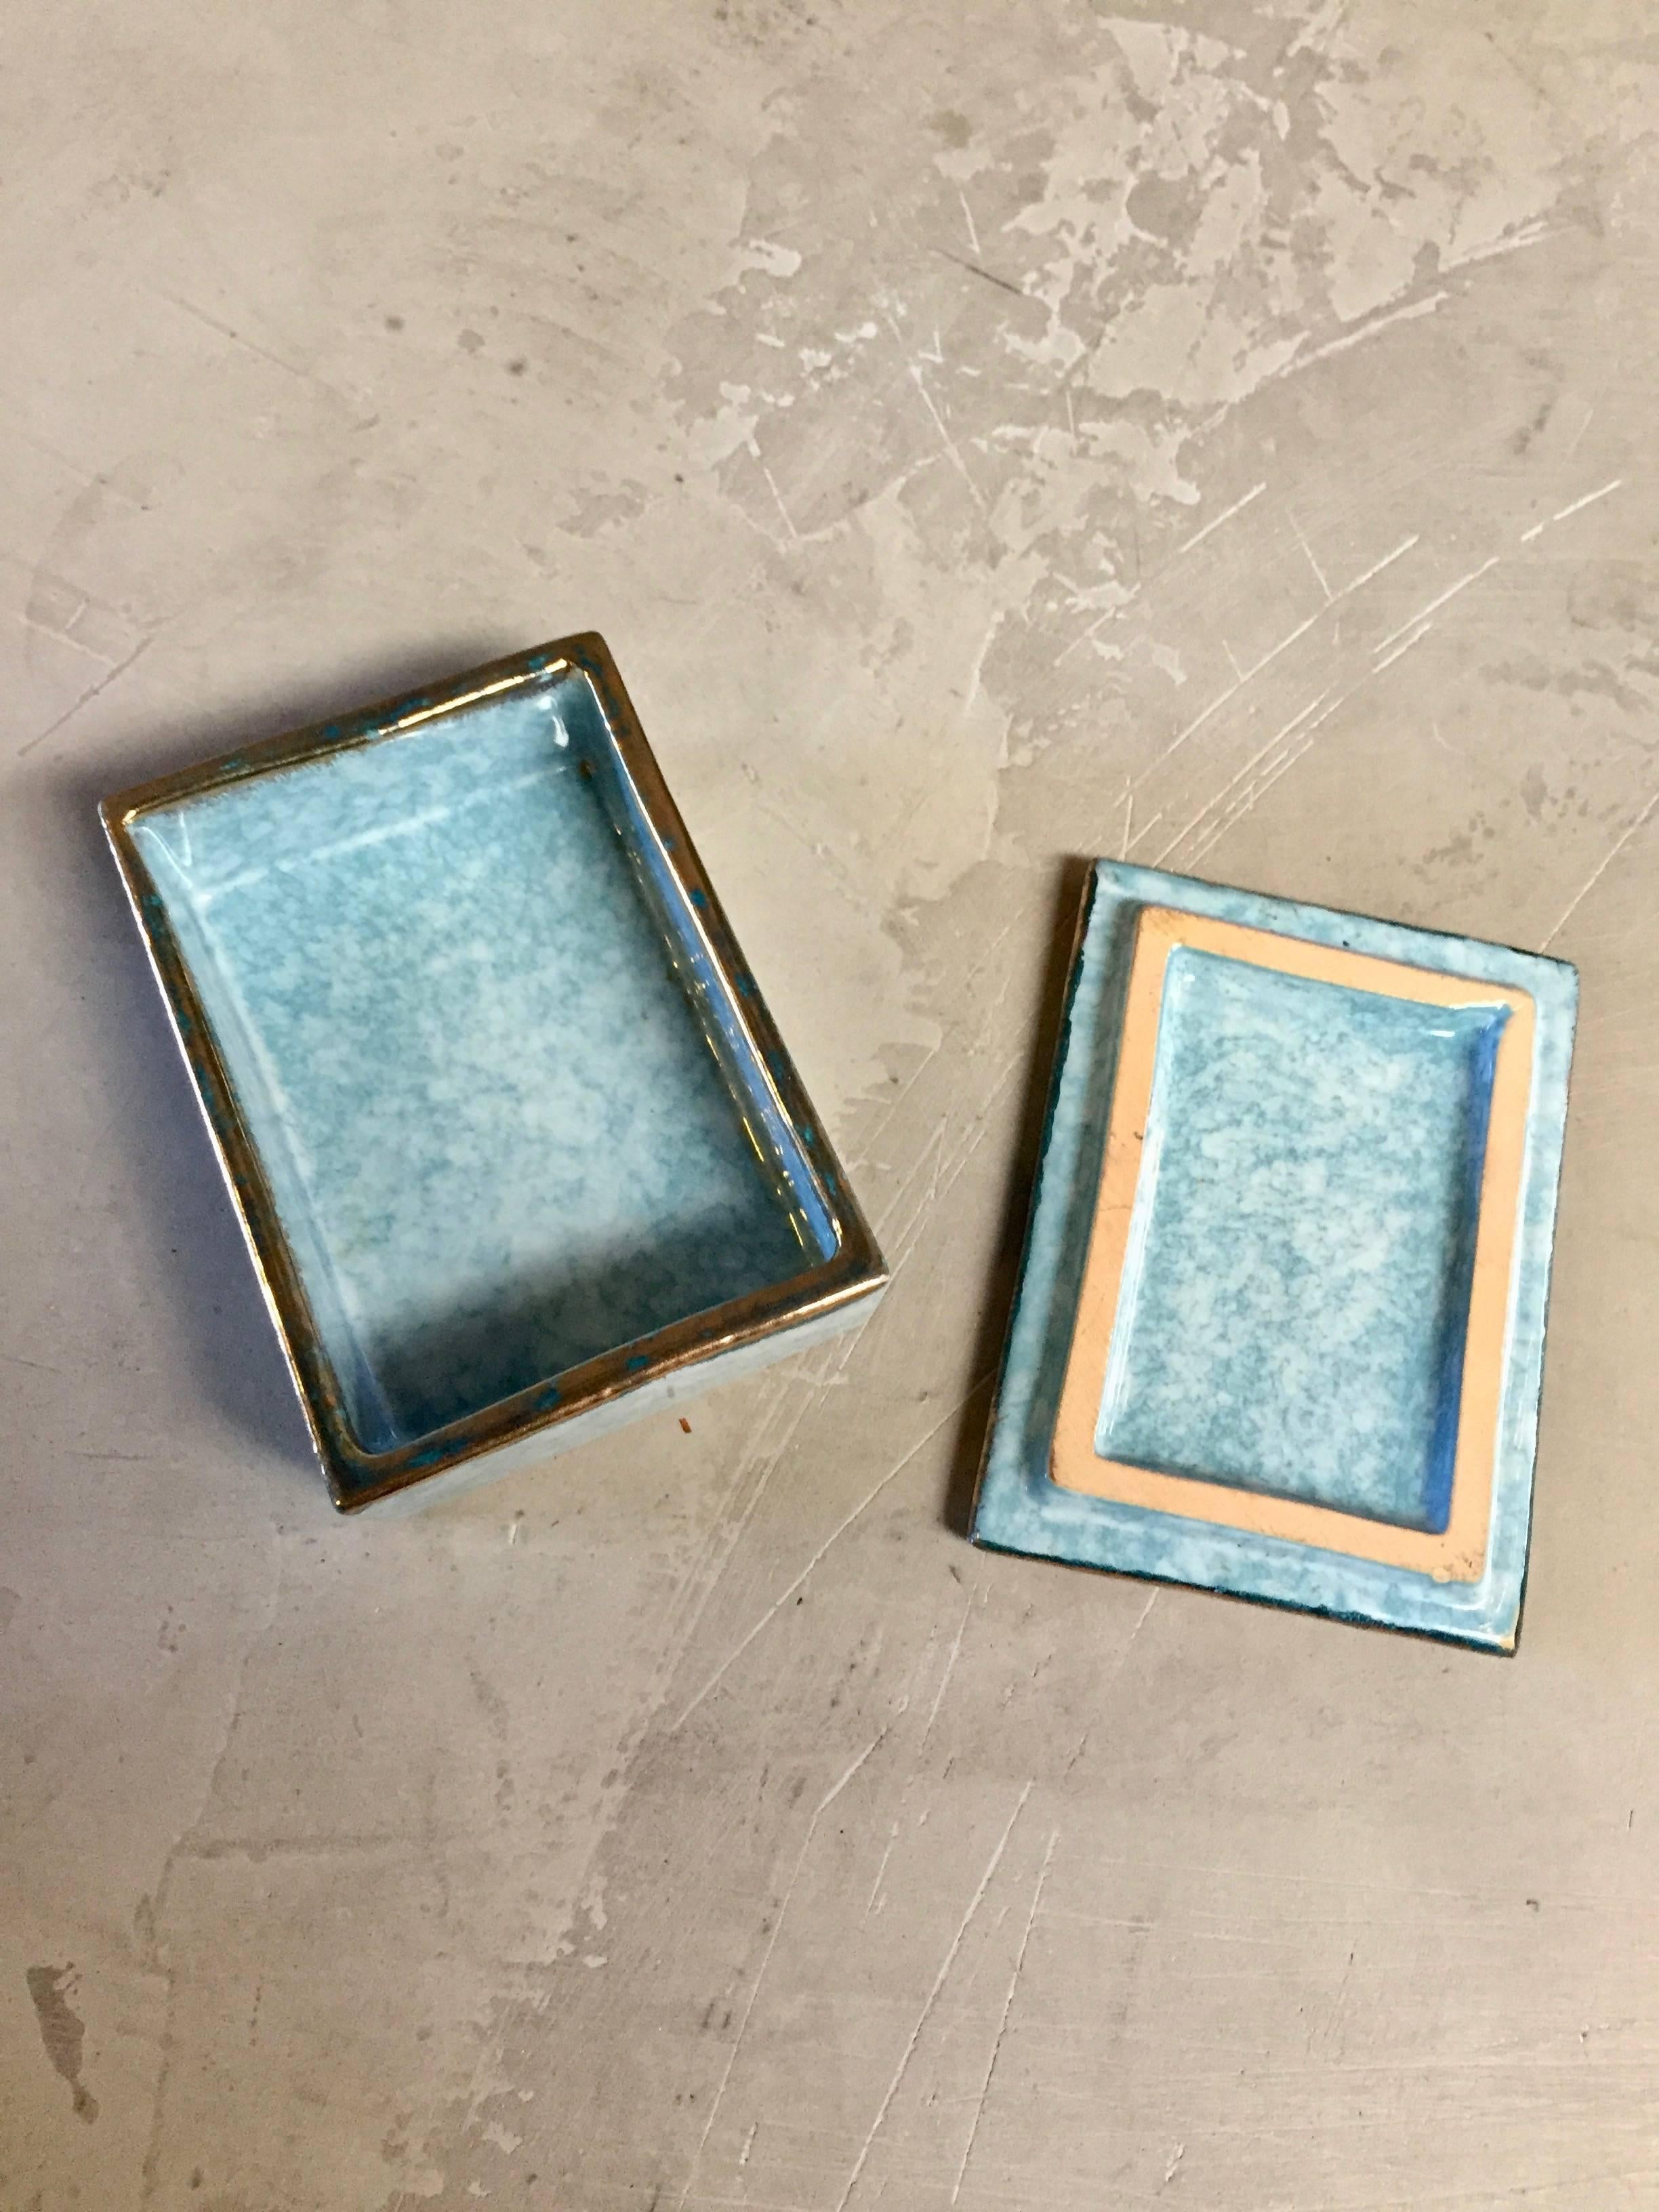 Italian Ceramic Box by Raymor 1